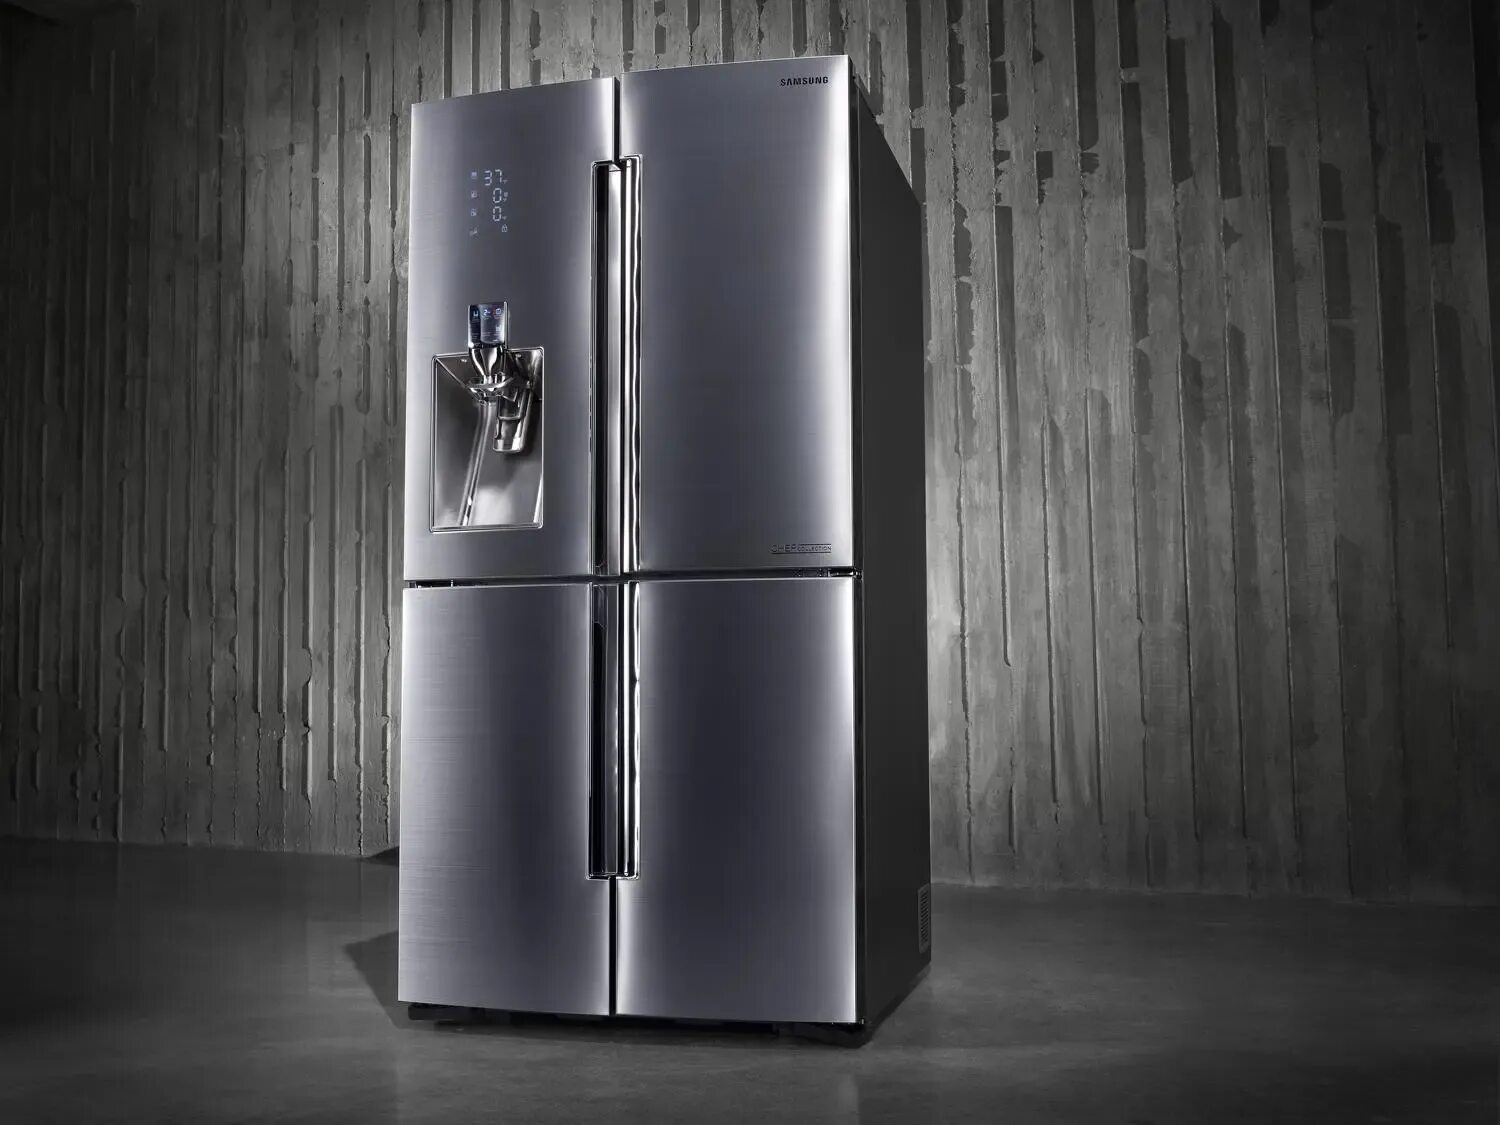 Холодильник Haier HRF-541dm7ru. Холодильник Samsung rsj1kers. Многодверный Haier hb18fgwaaaru. Холодильник (Side-by-Side) LG GC-q247cbdc. Новые модели холодильников